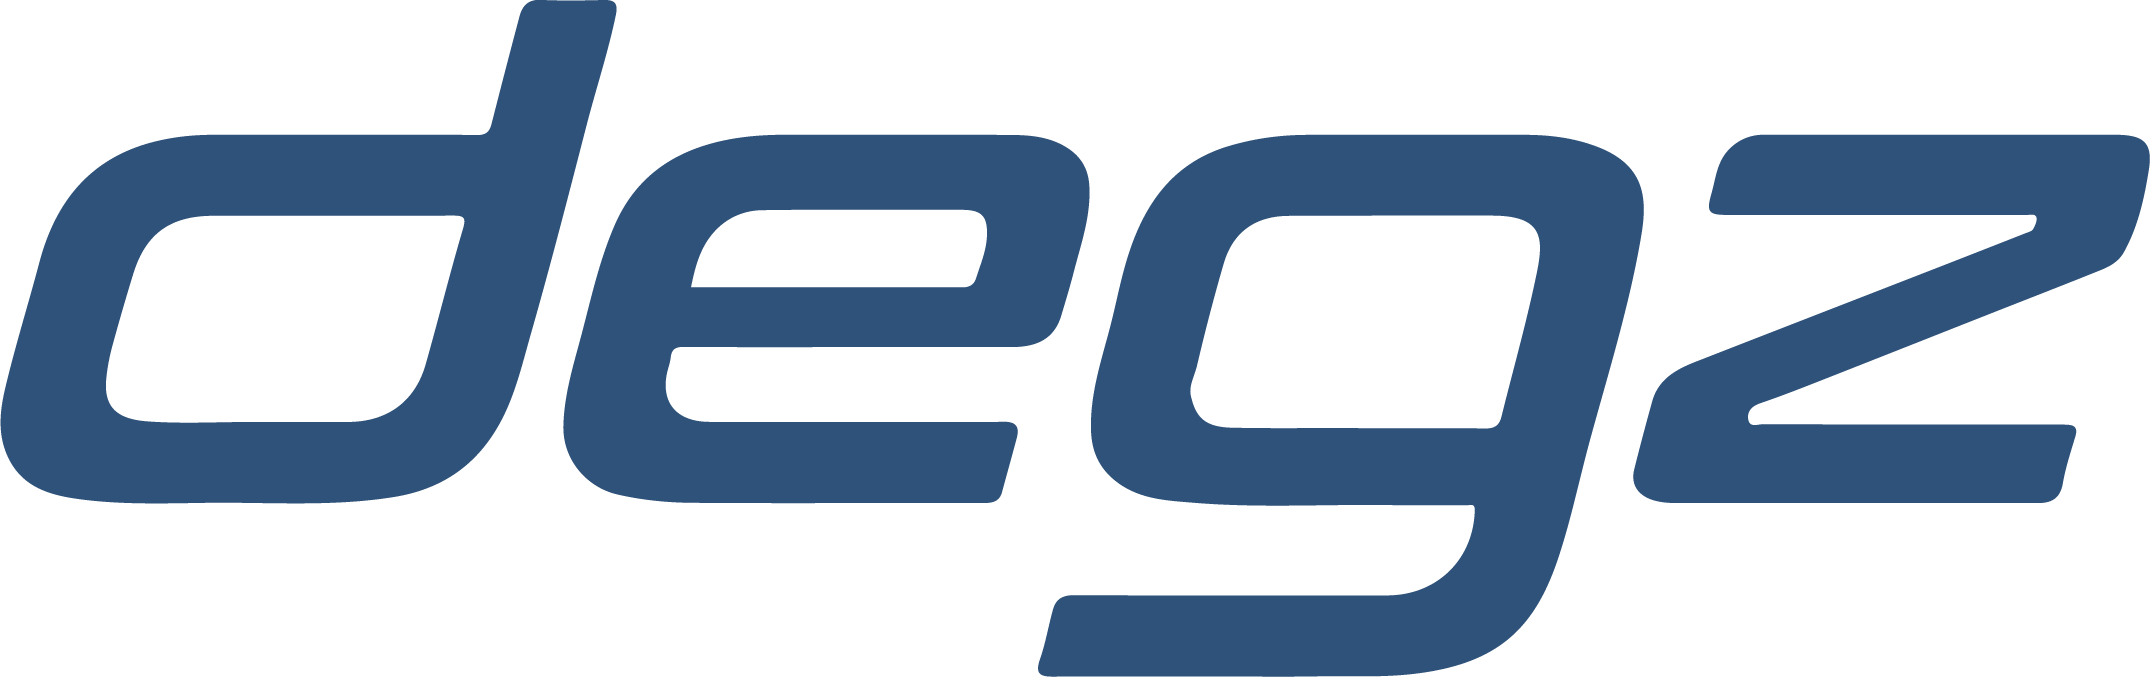 Degz Robotics Logo